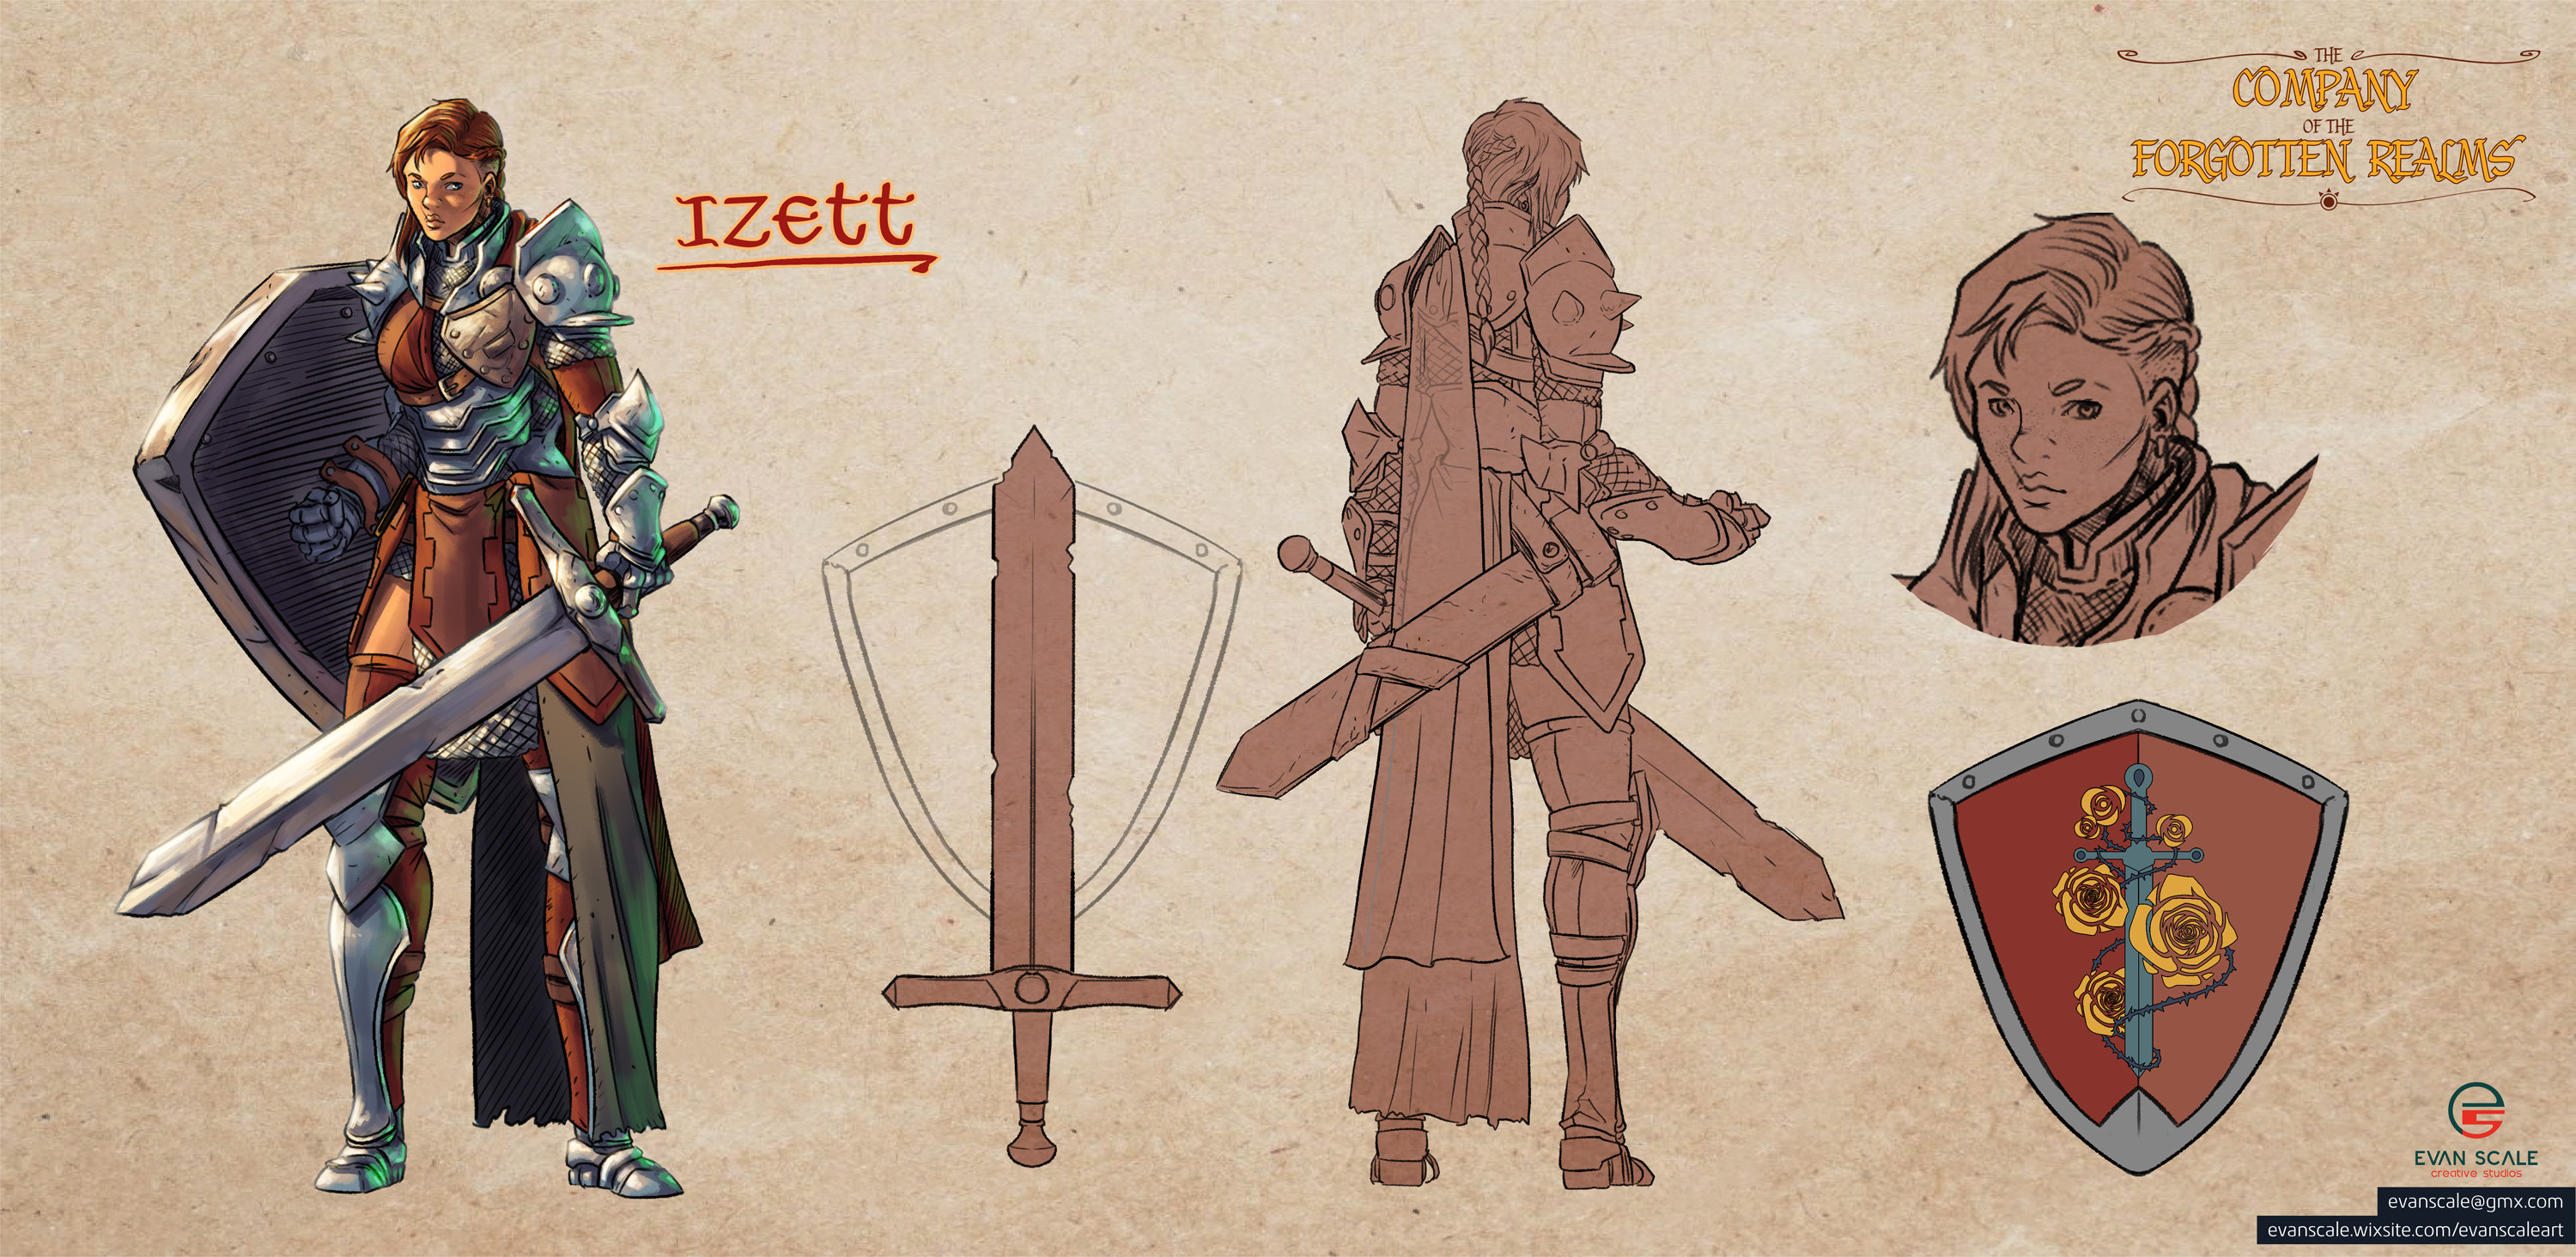 Izett - Knight